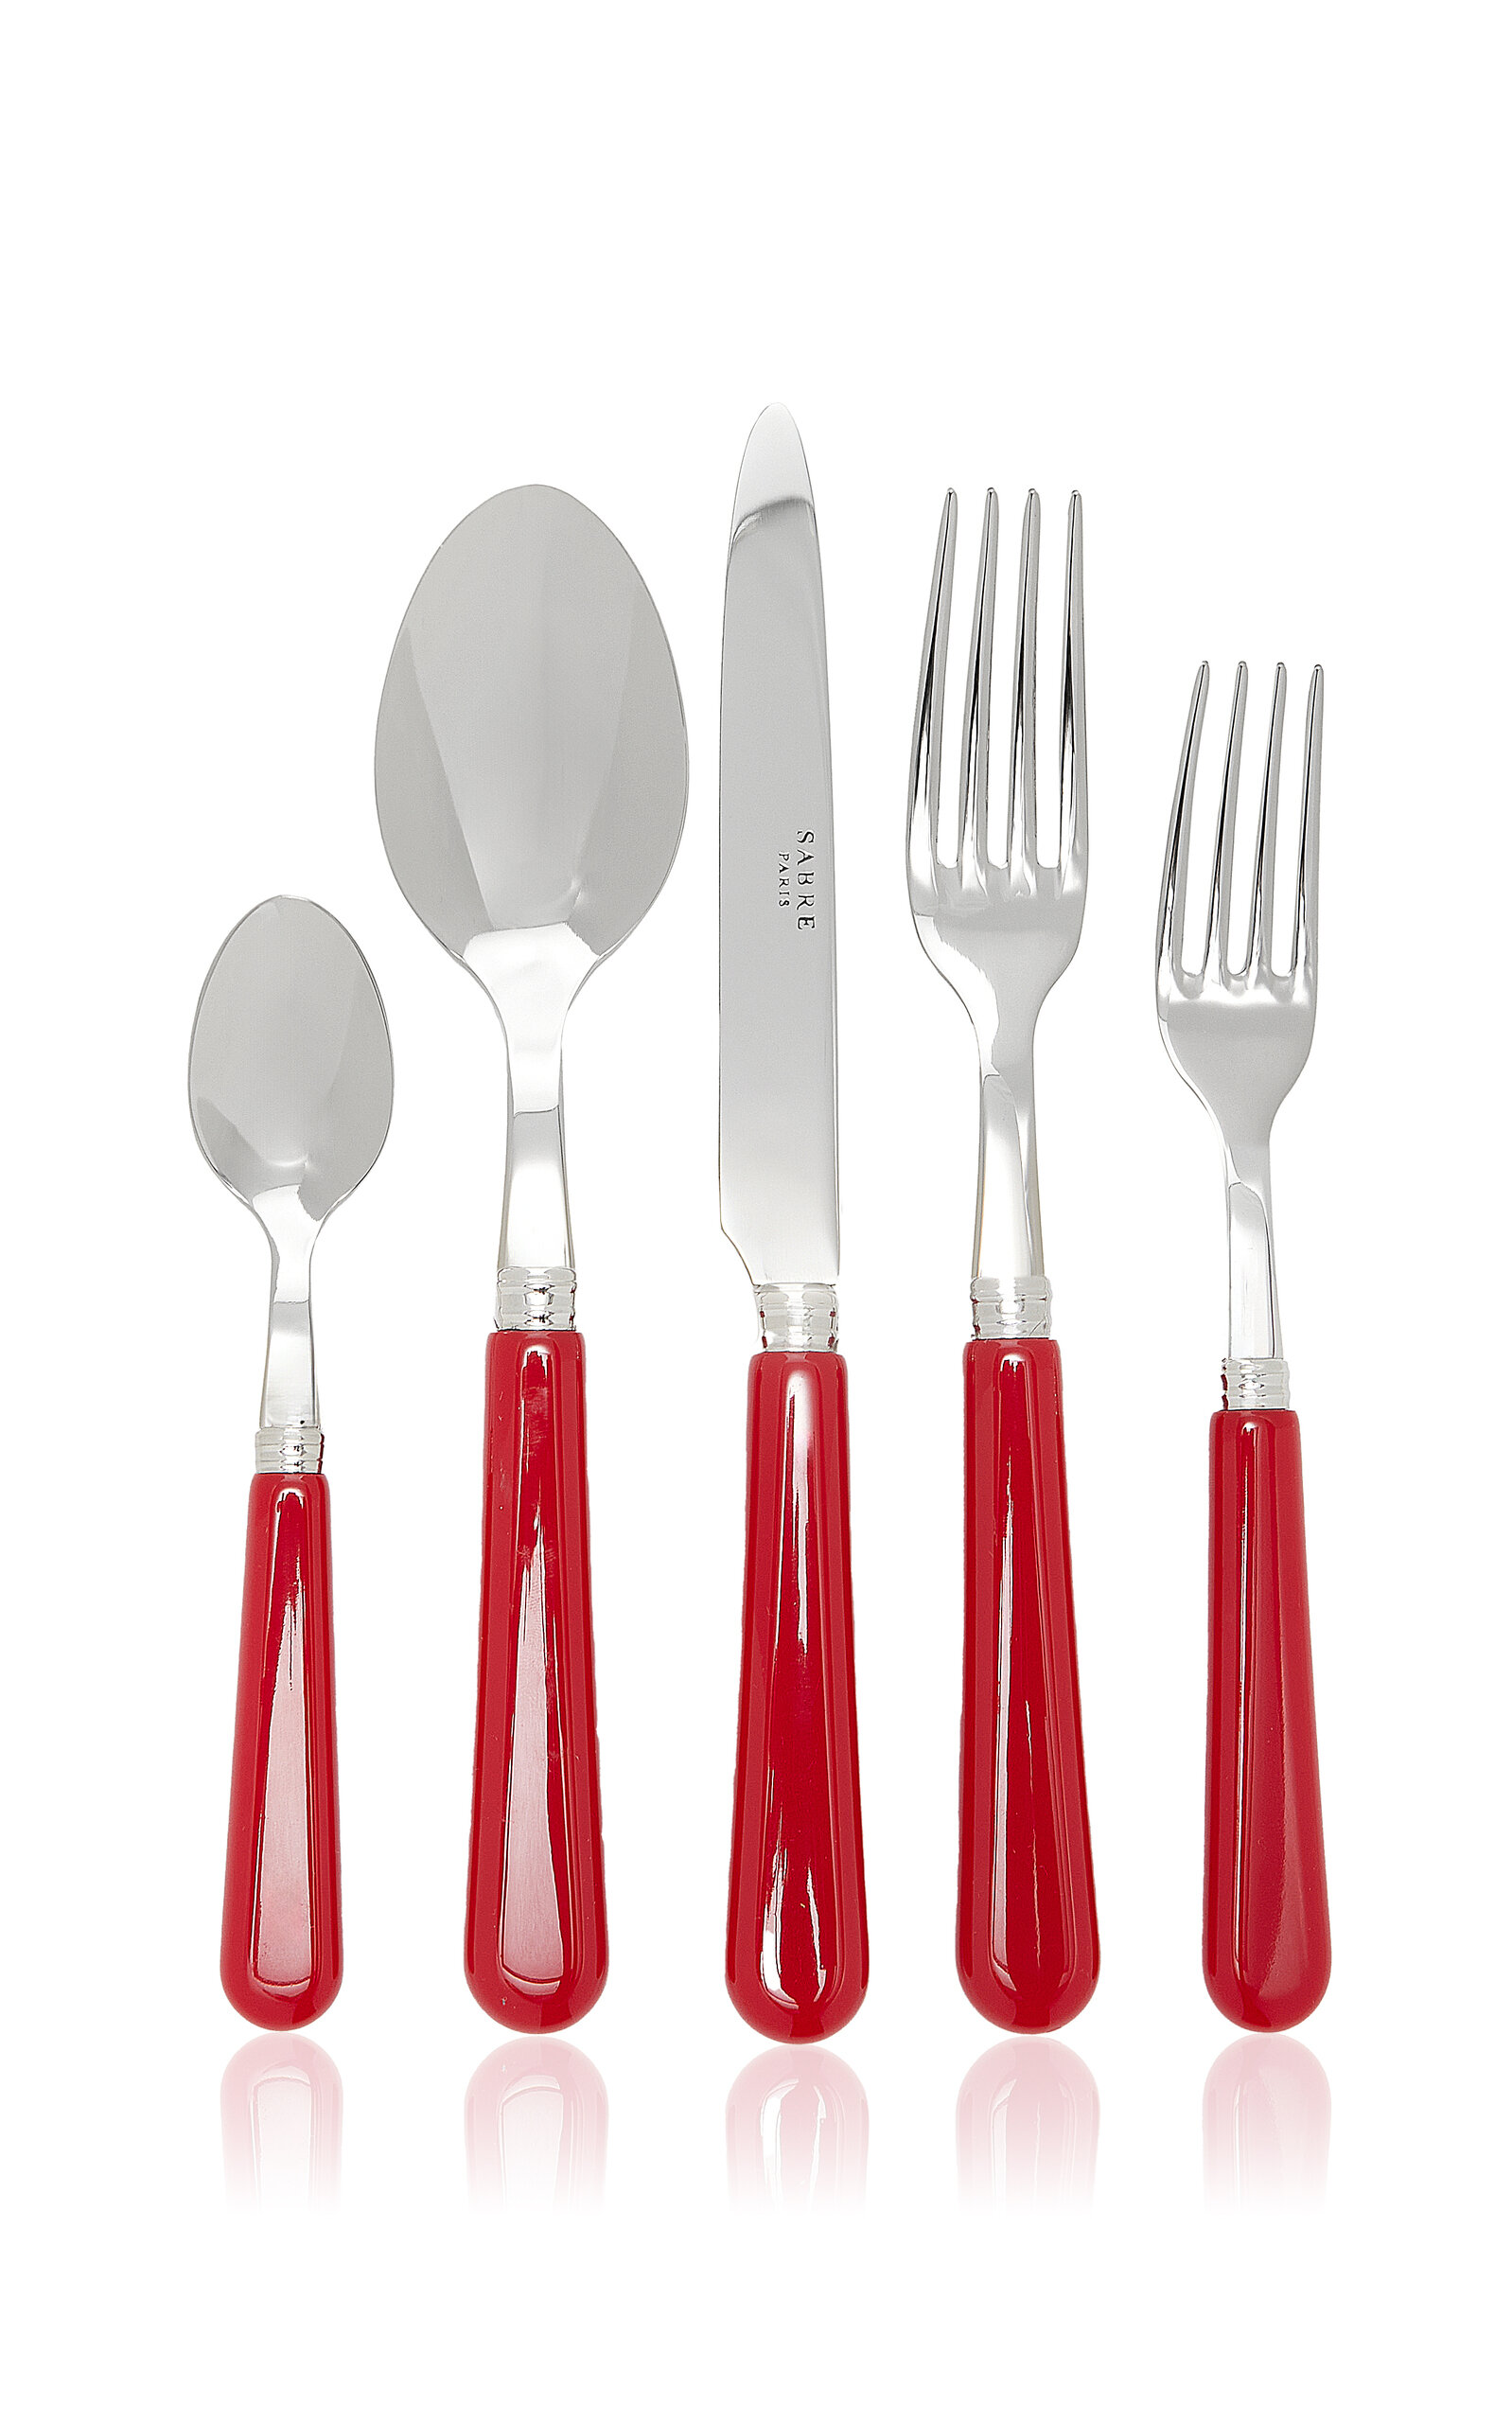 Sabre Five-piece Pop Stainless Steel Silverware Set In Red